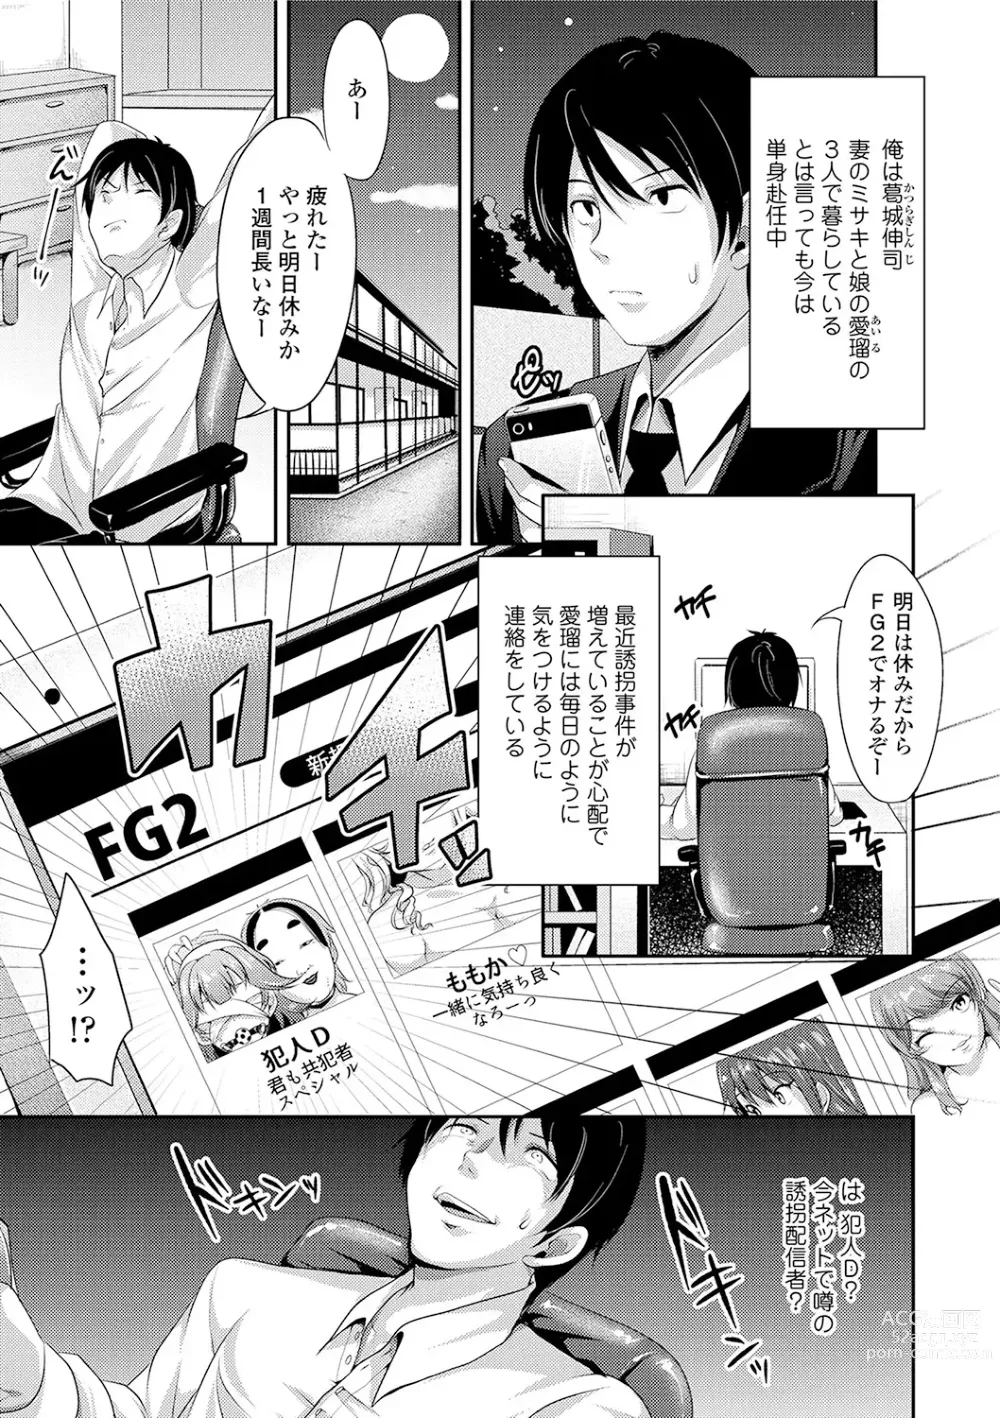 Page 7 of manga Kowashite Asobo + DLsite Gentei Chara Settei & Plot